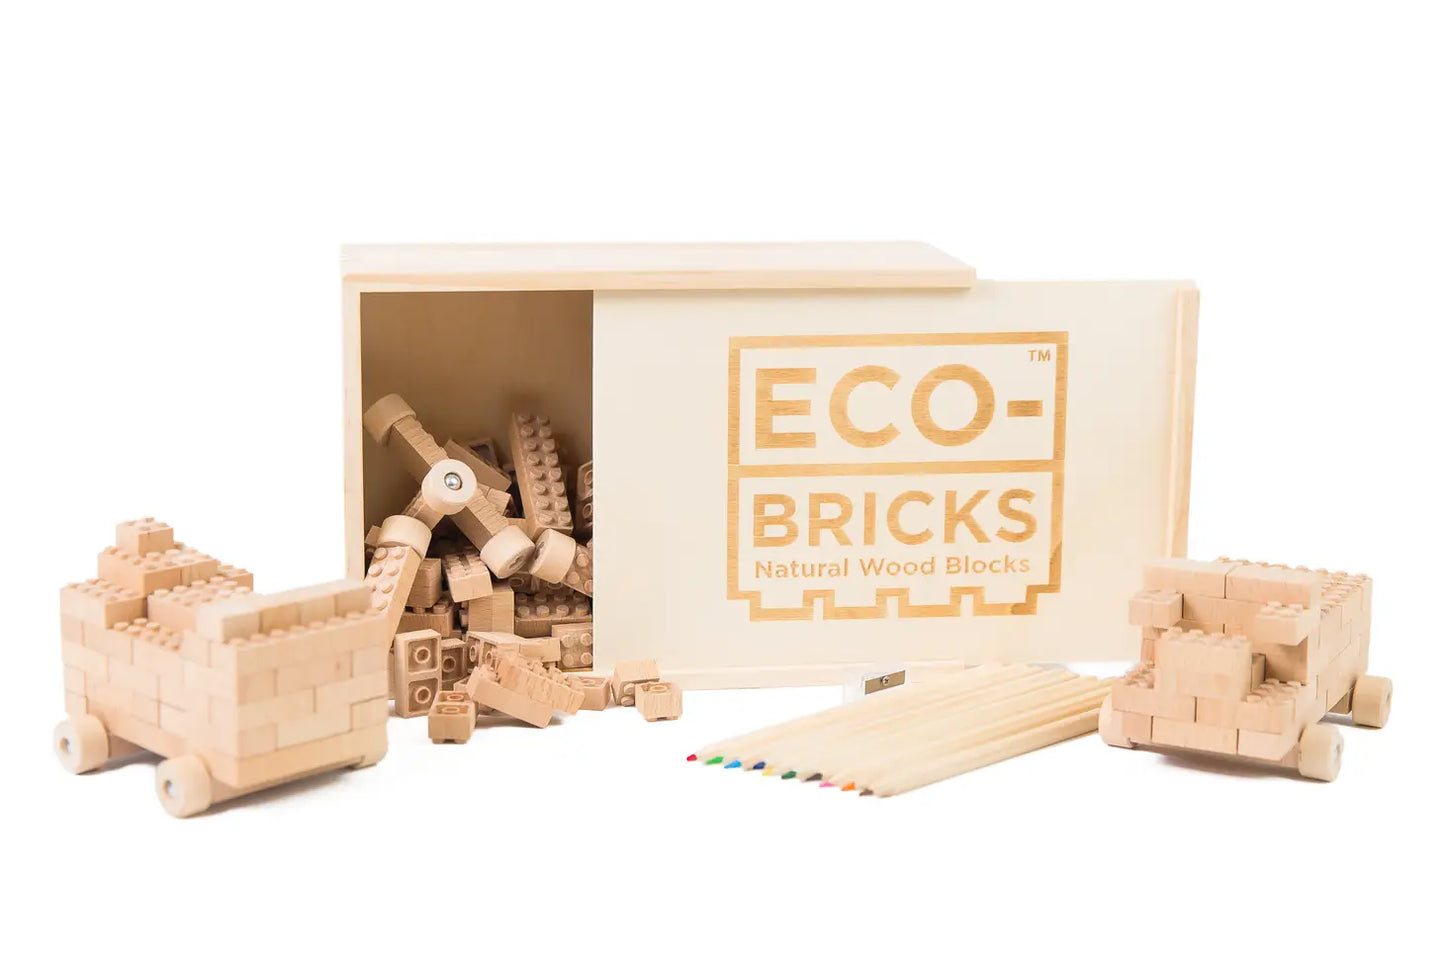 Once Kids-90pc Eco-bricks